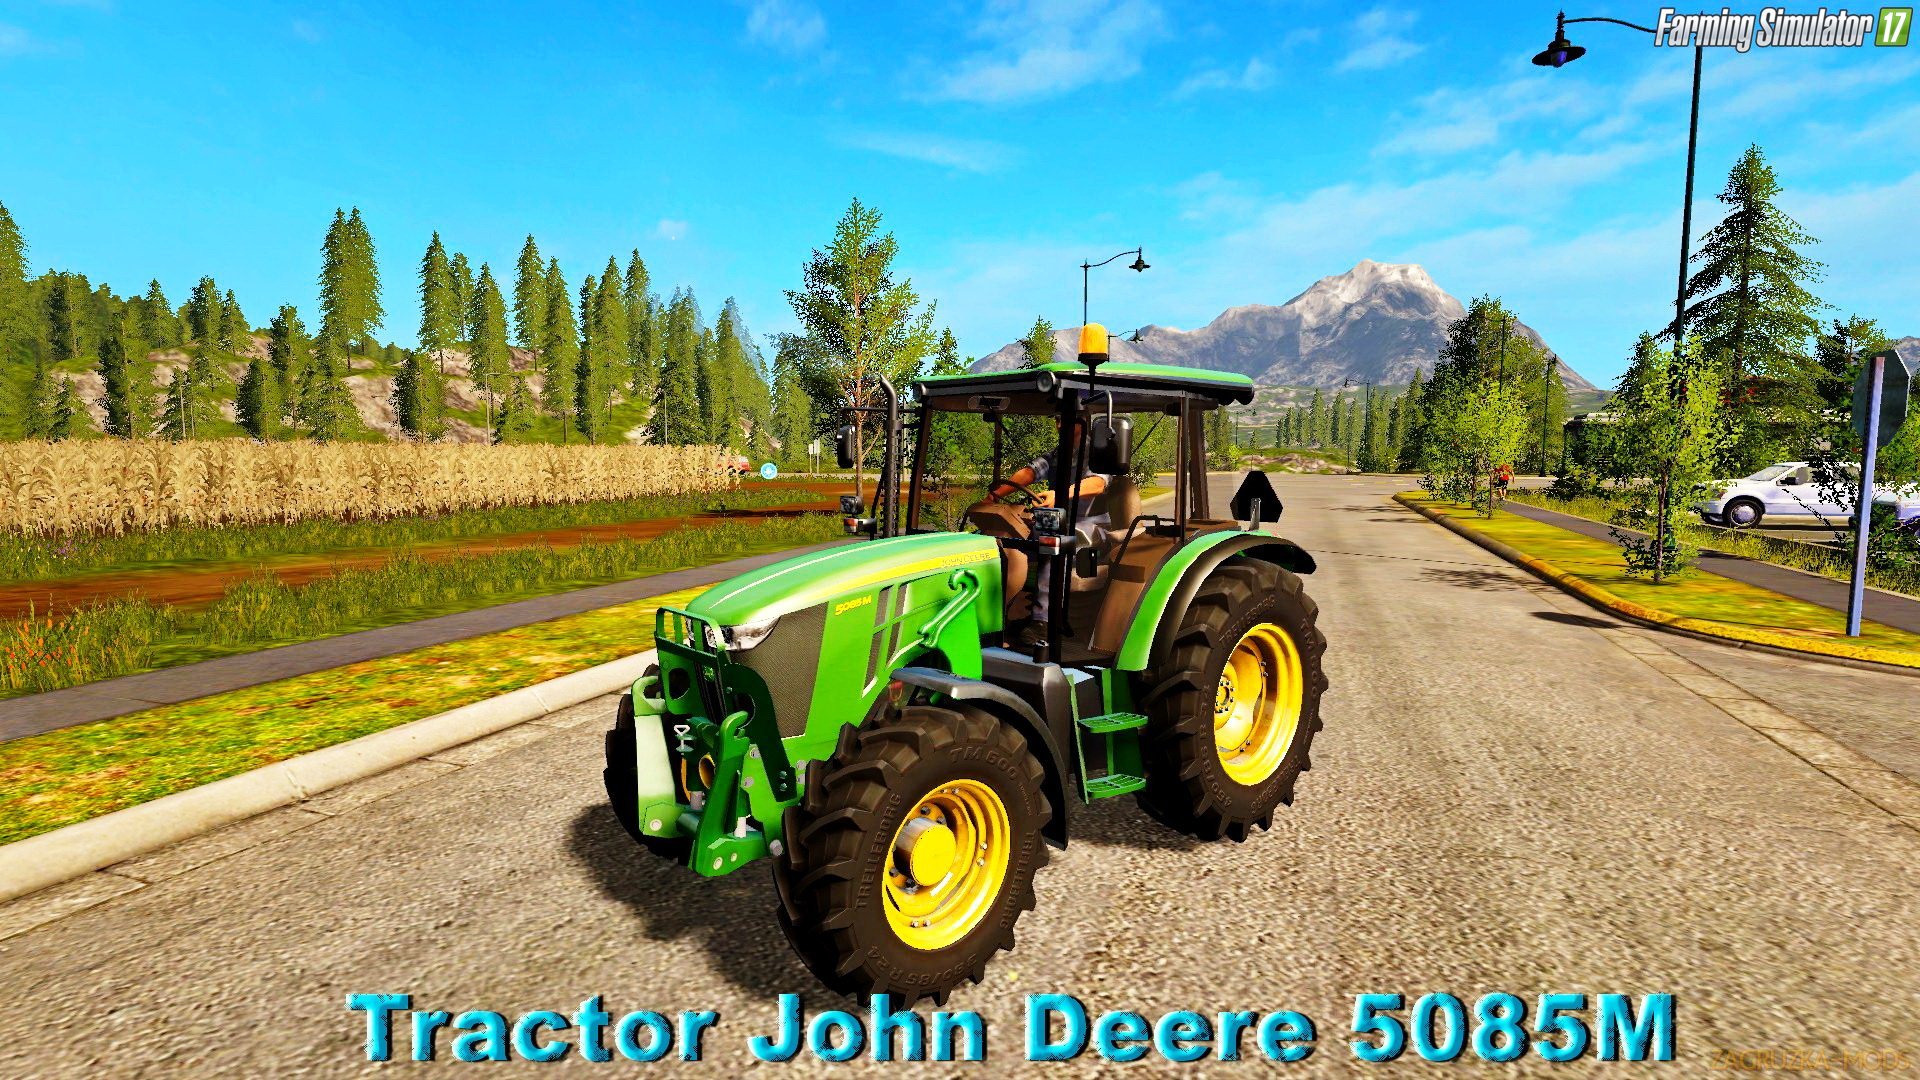 John Deere 5085m V13 For Fs 17 Simulator Mods Ets2 Ats Fs22 Csgo Gta 5 Train 1471